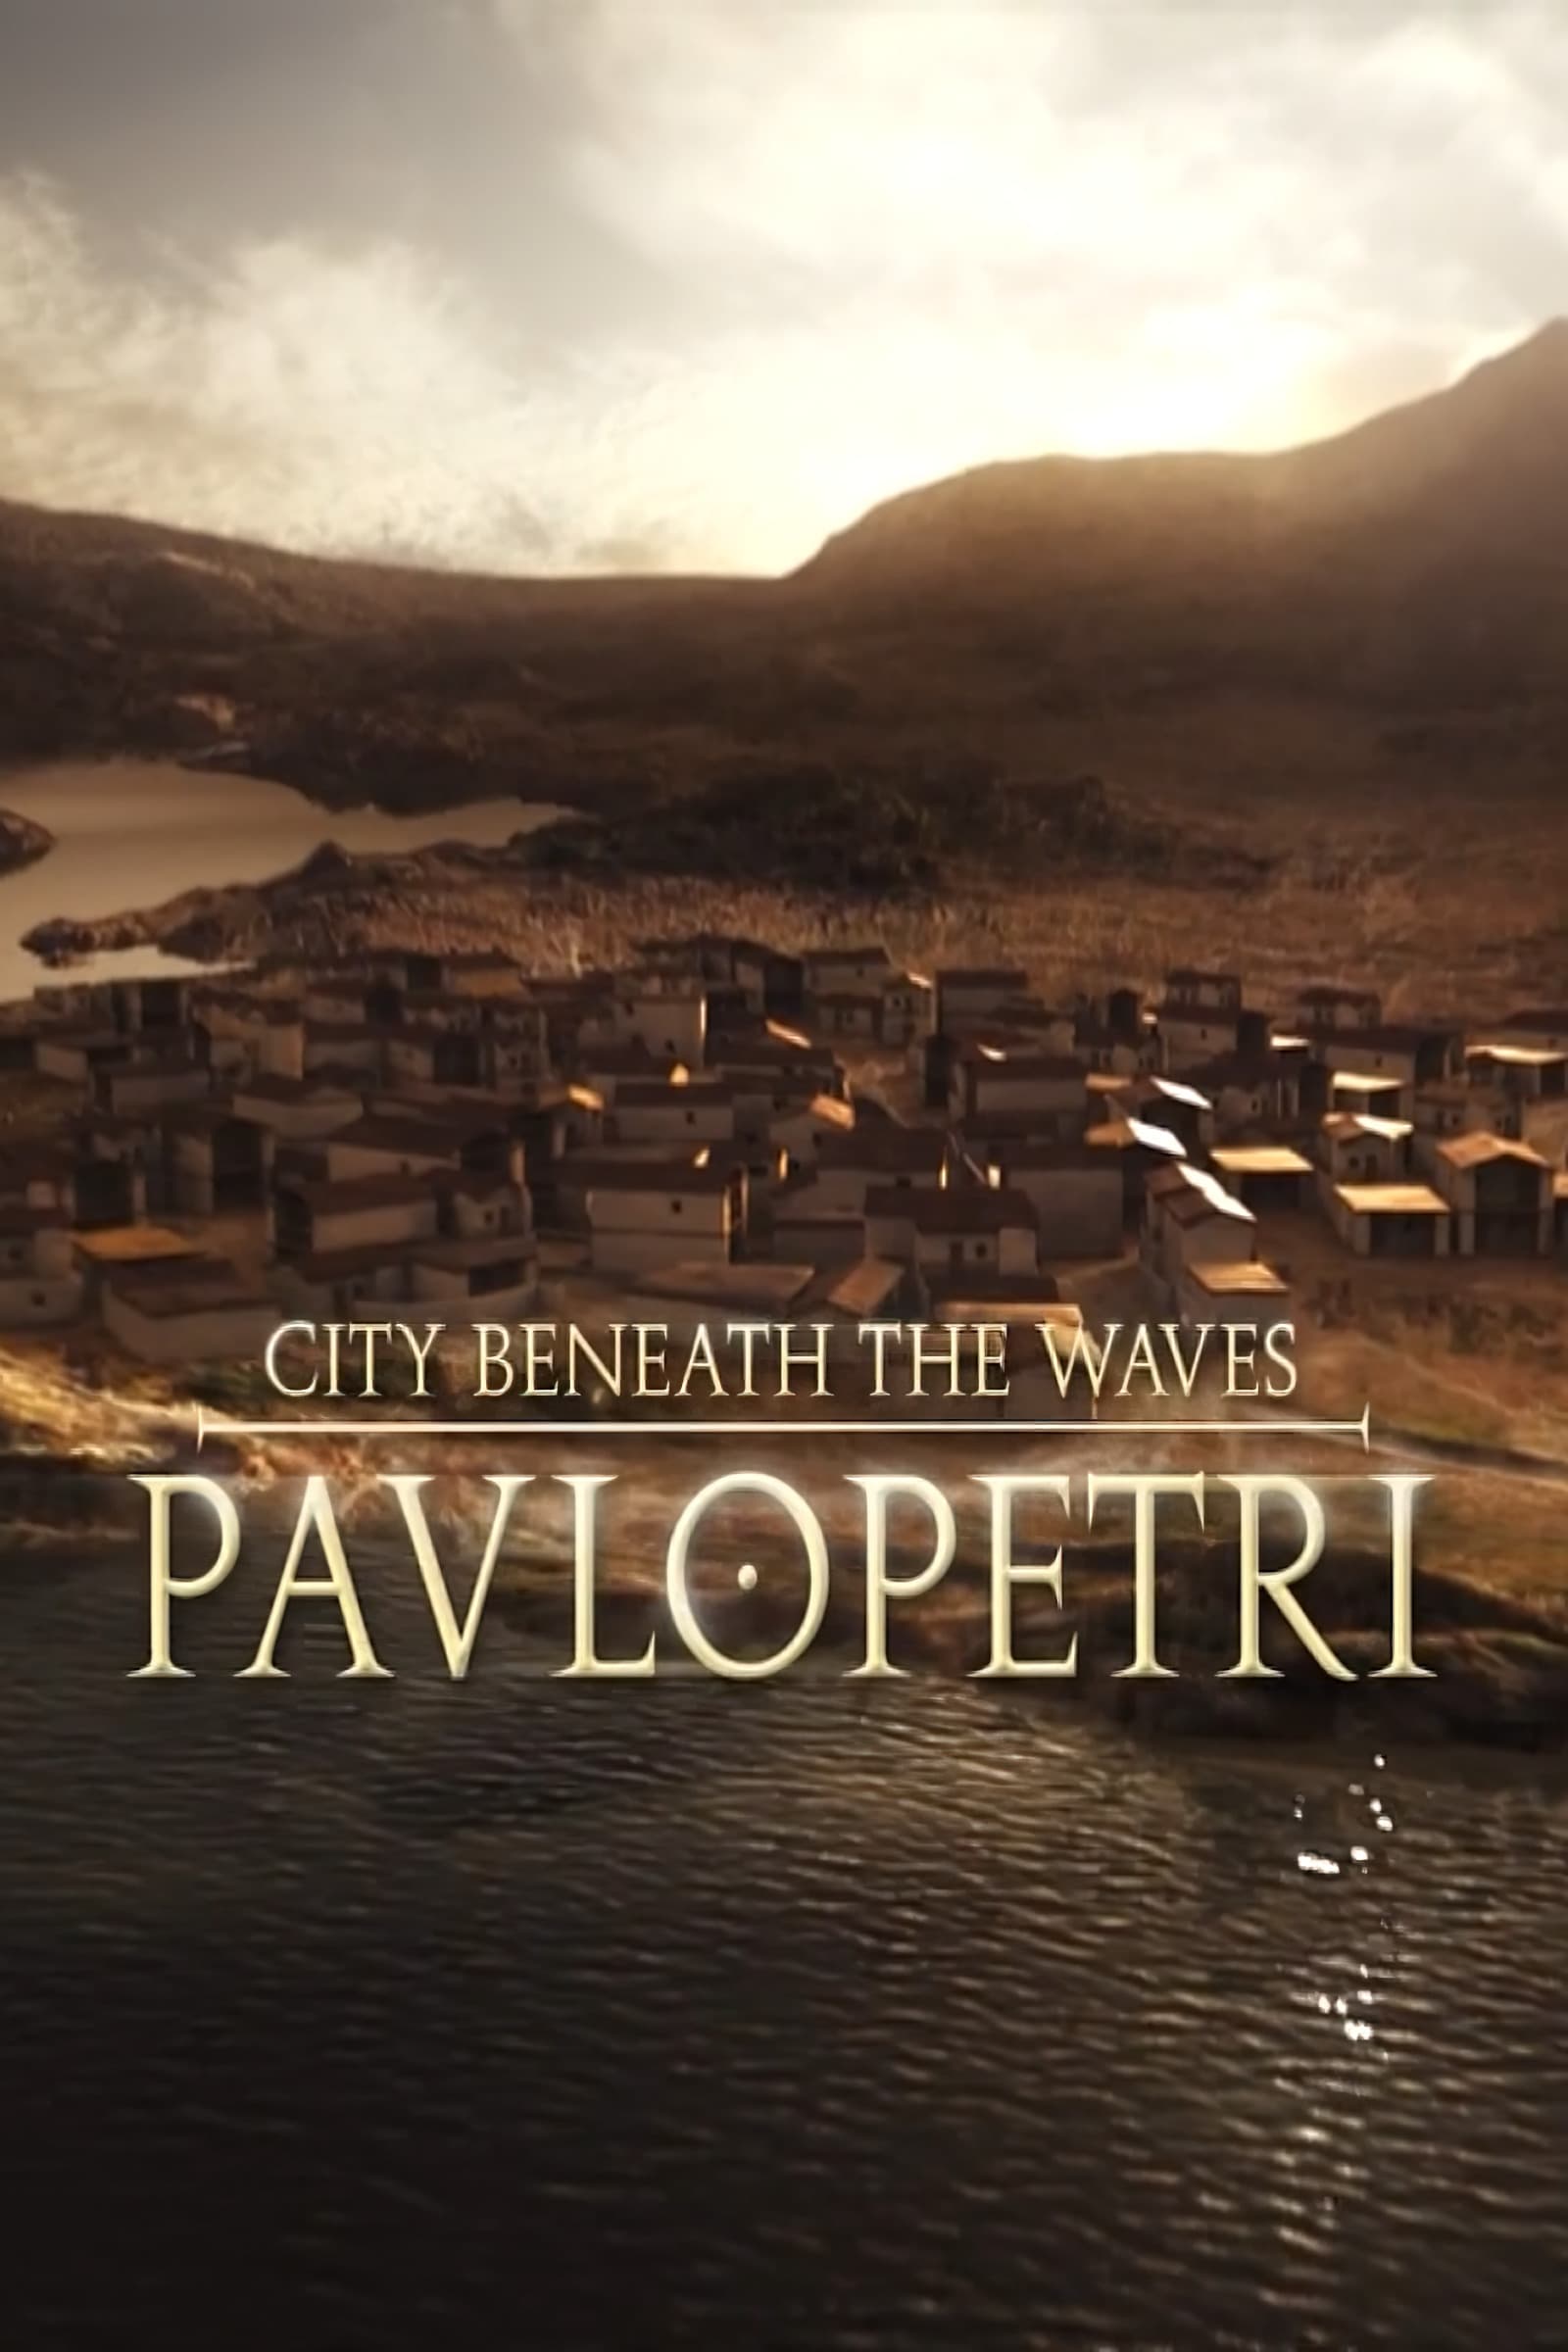 Pavlopetri: The City Beneath the Waves